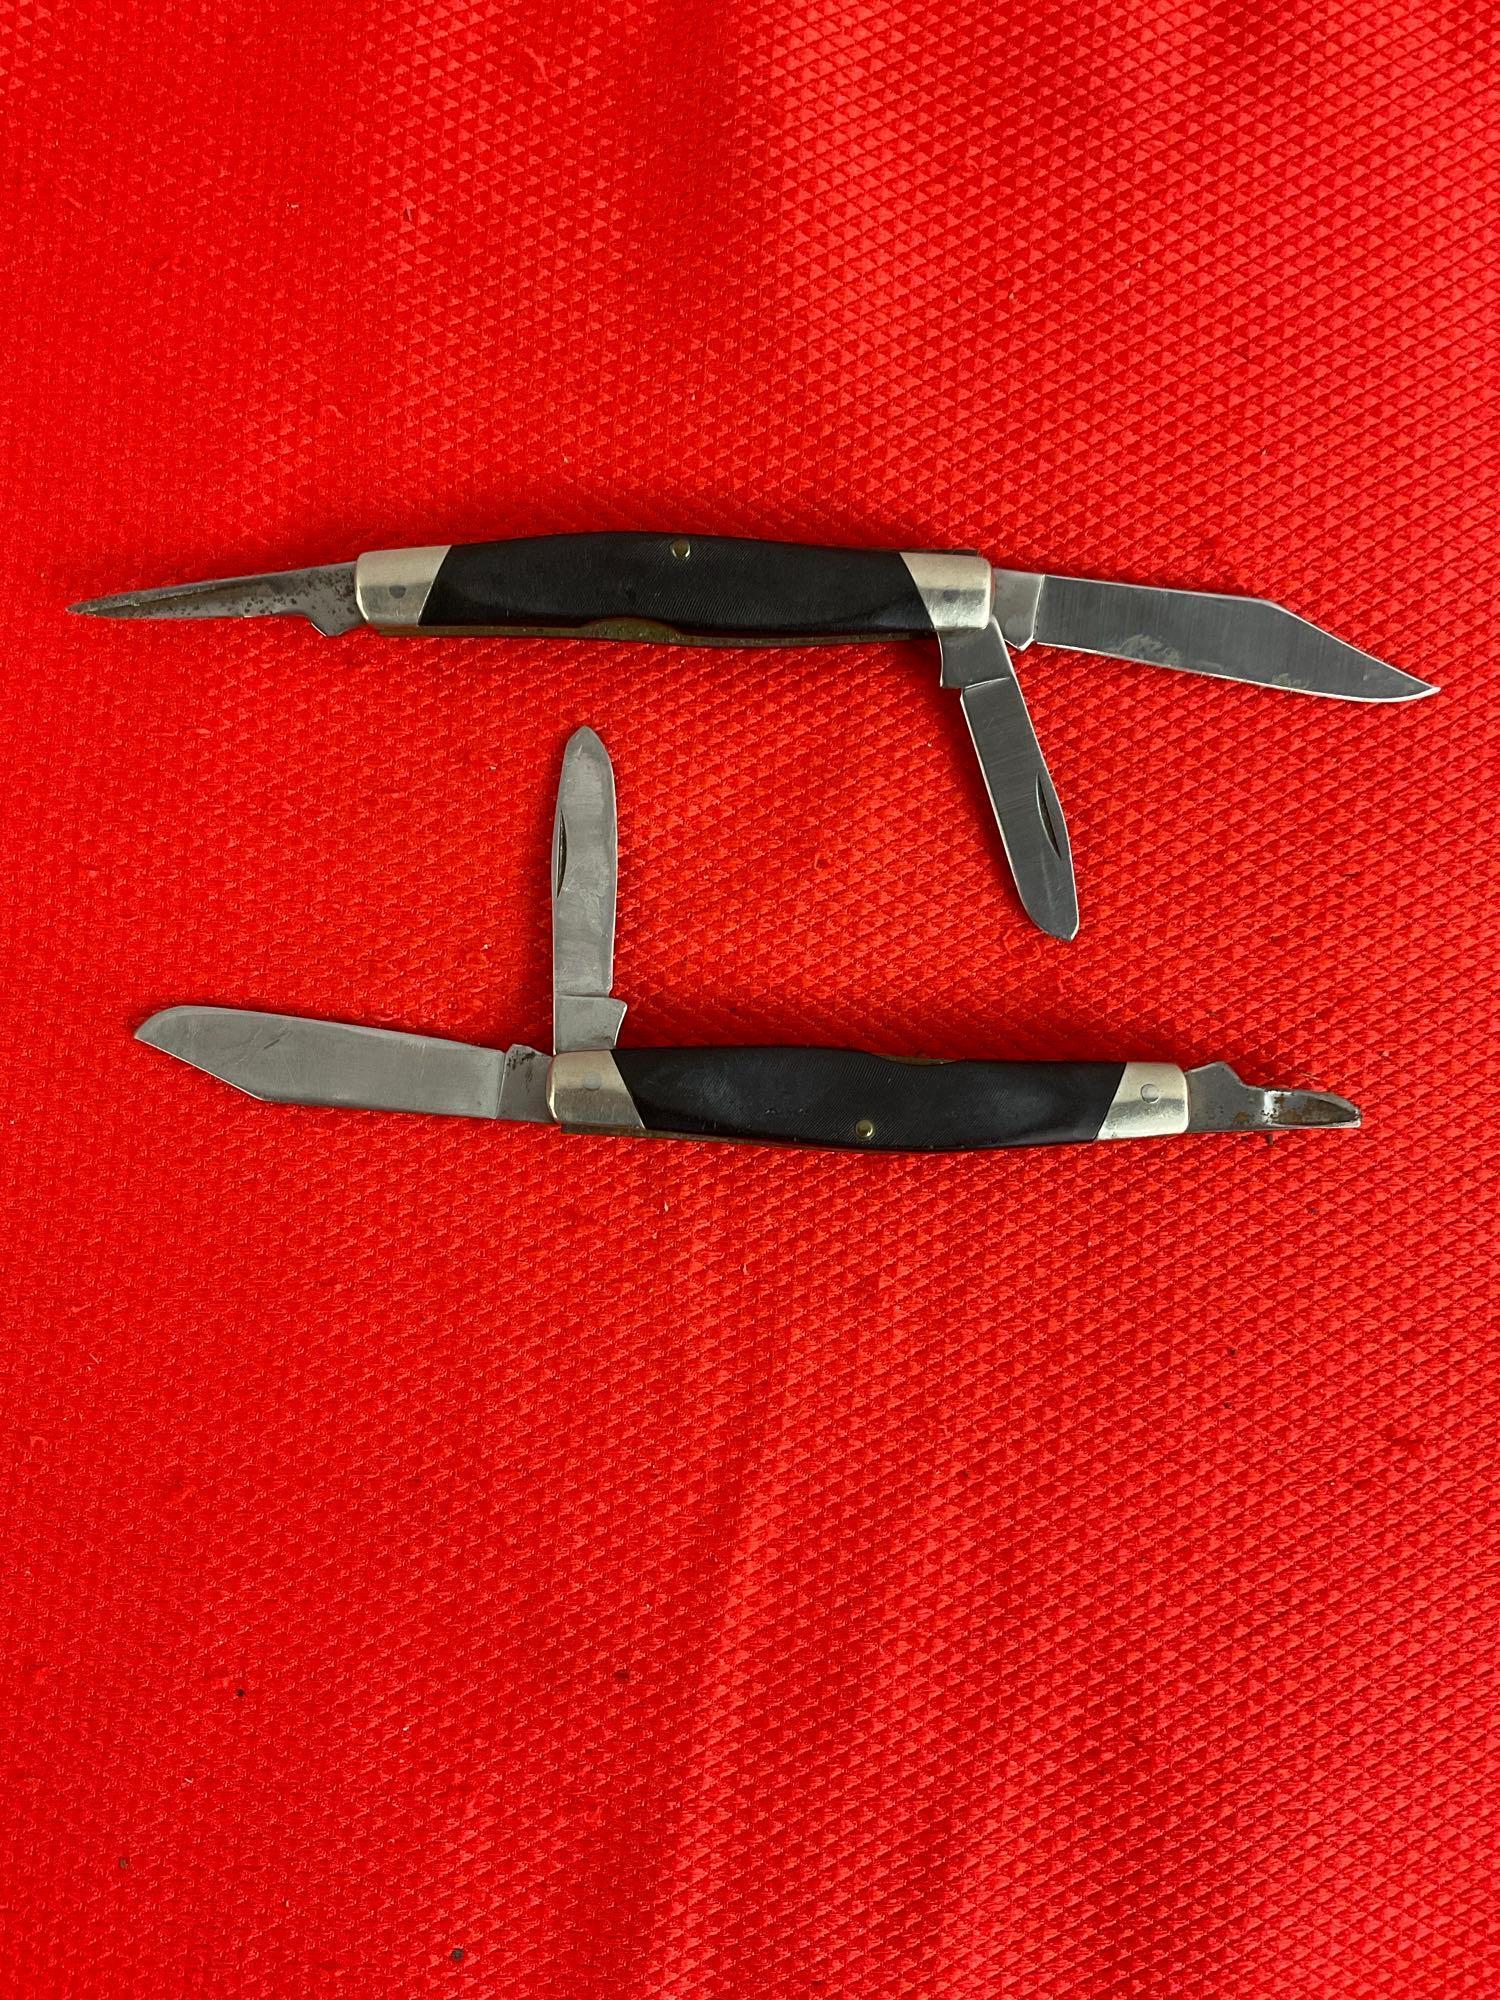 2 pcs Vintage Buck 2.5" Steel Folding 3-Blade Stockman Pocket Knife Model 319 w/ Delrine Handles....